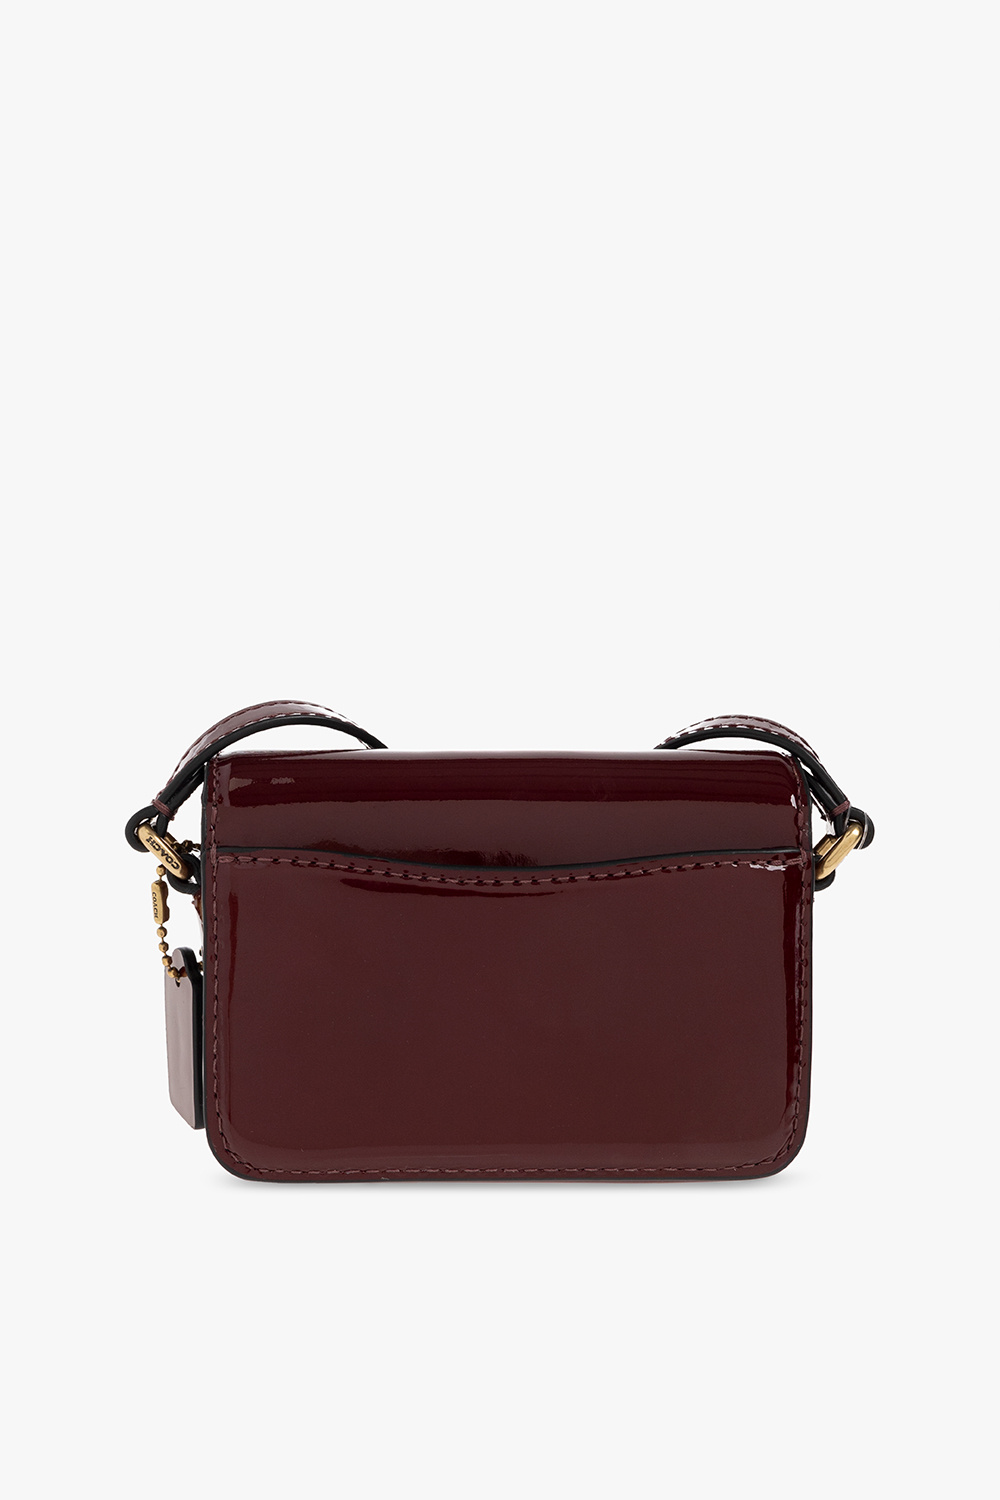 Shop Coach Casual Style Leather Elegant Style Logo Shoulder Bags by  Kyonkyon77